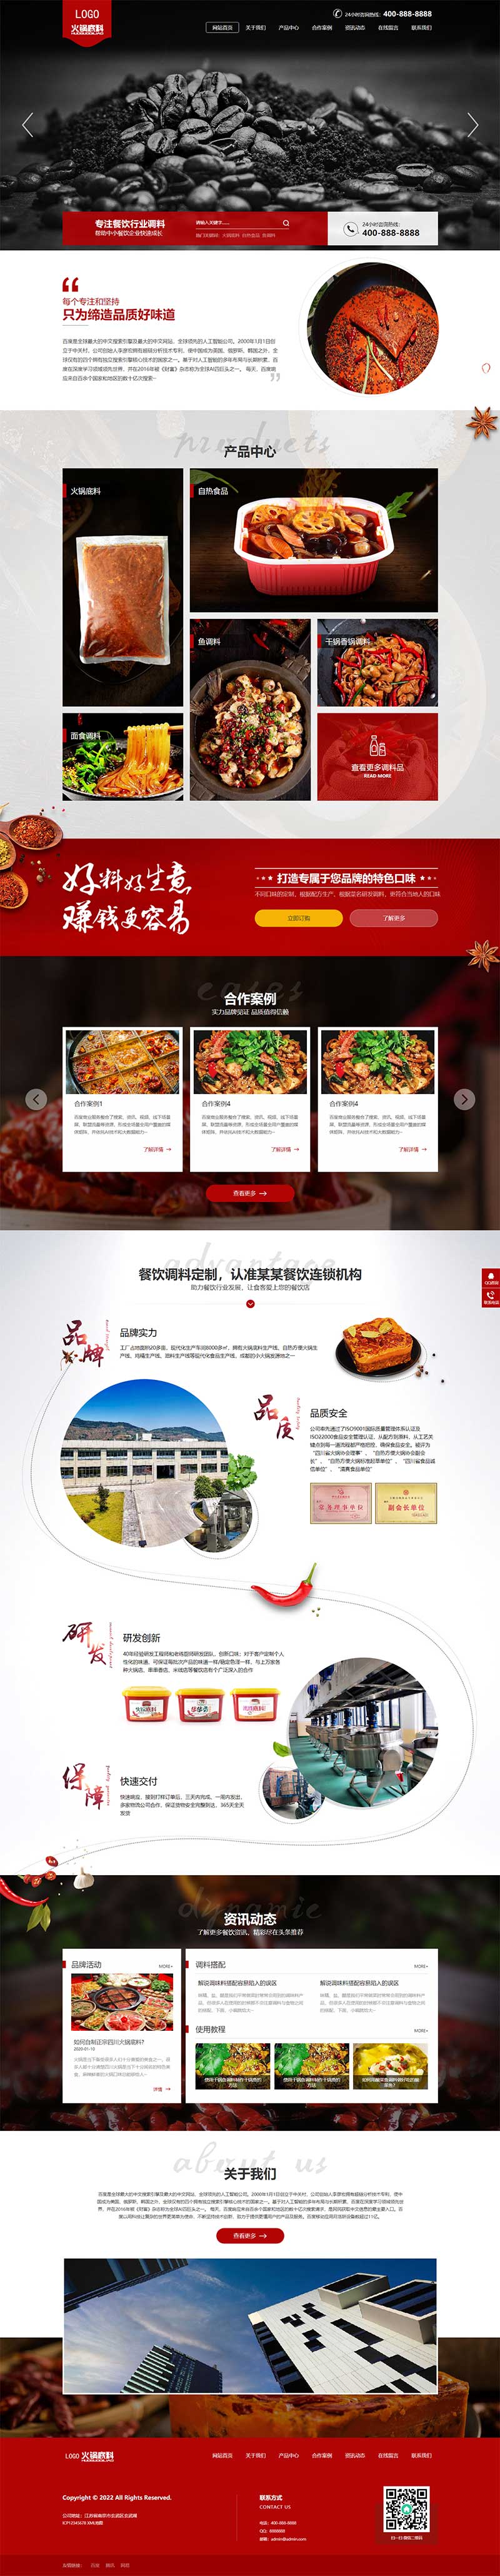 (PC+WAP)营销型餐饮美食网站源码 pbootcms高端火锅底料食品调料网站模板